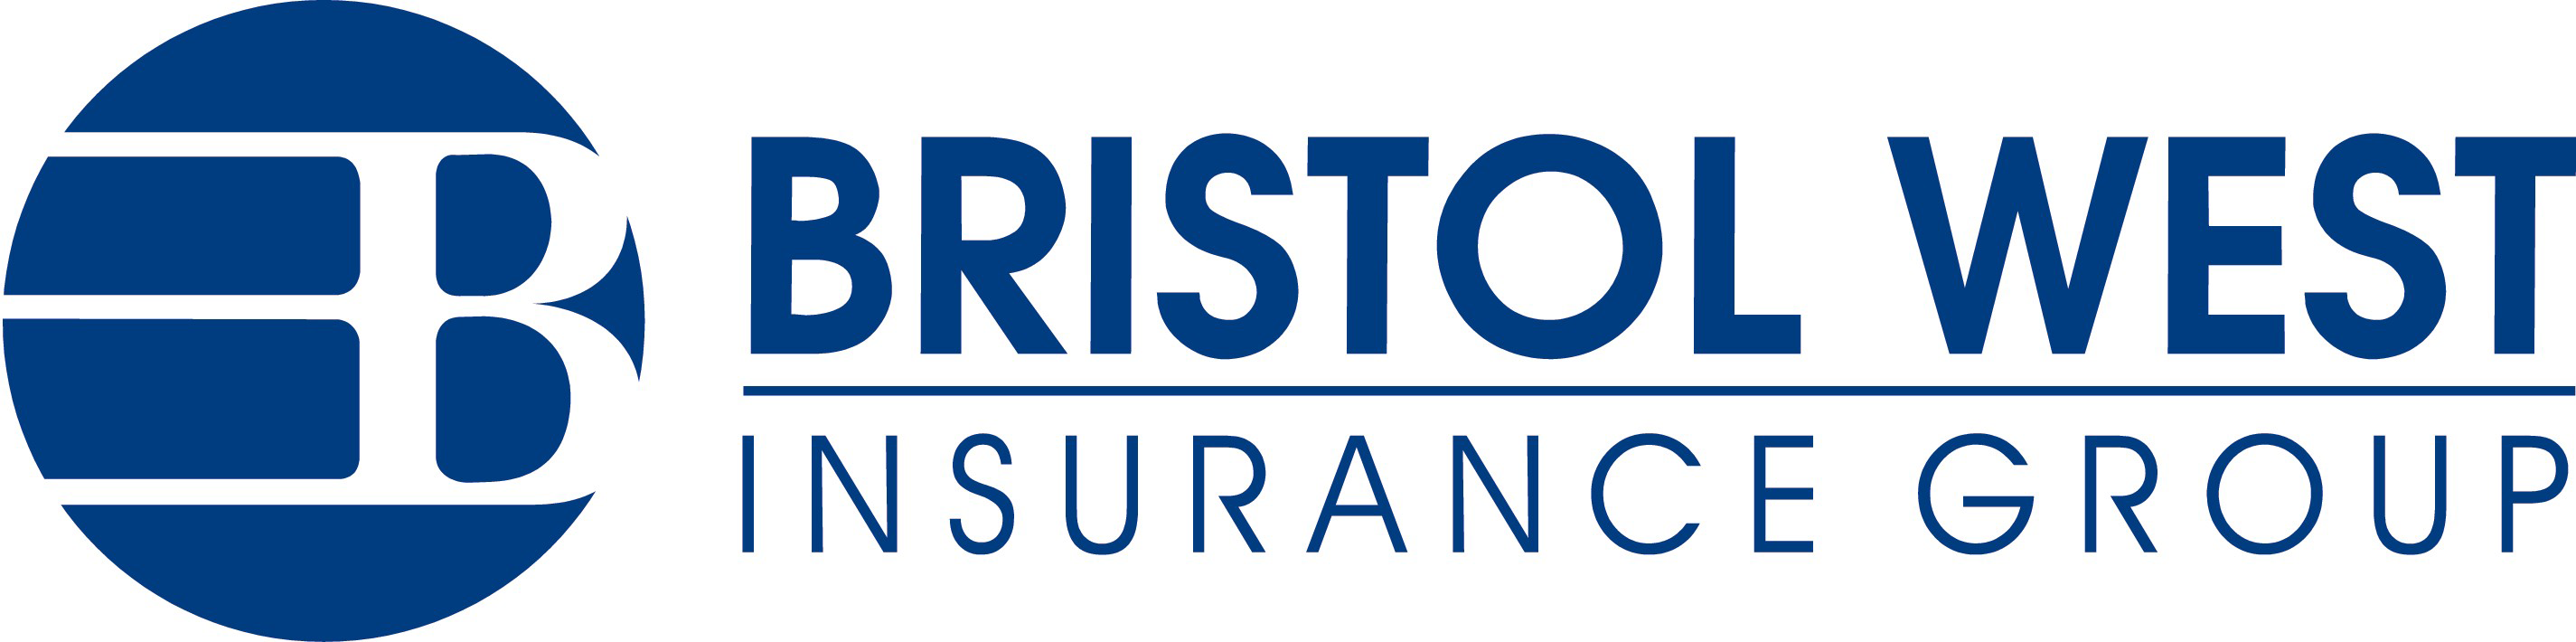 bristol-west-insurance-logo